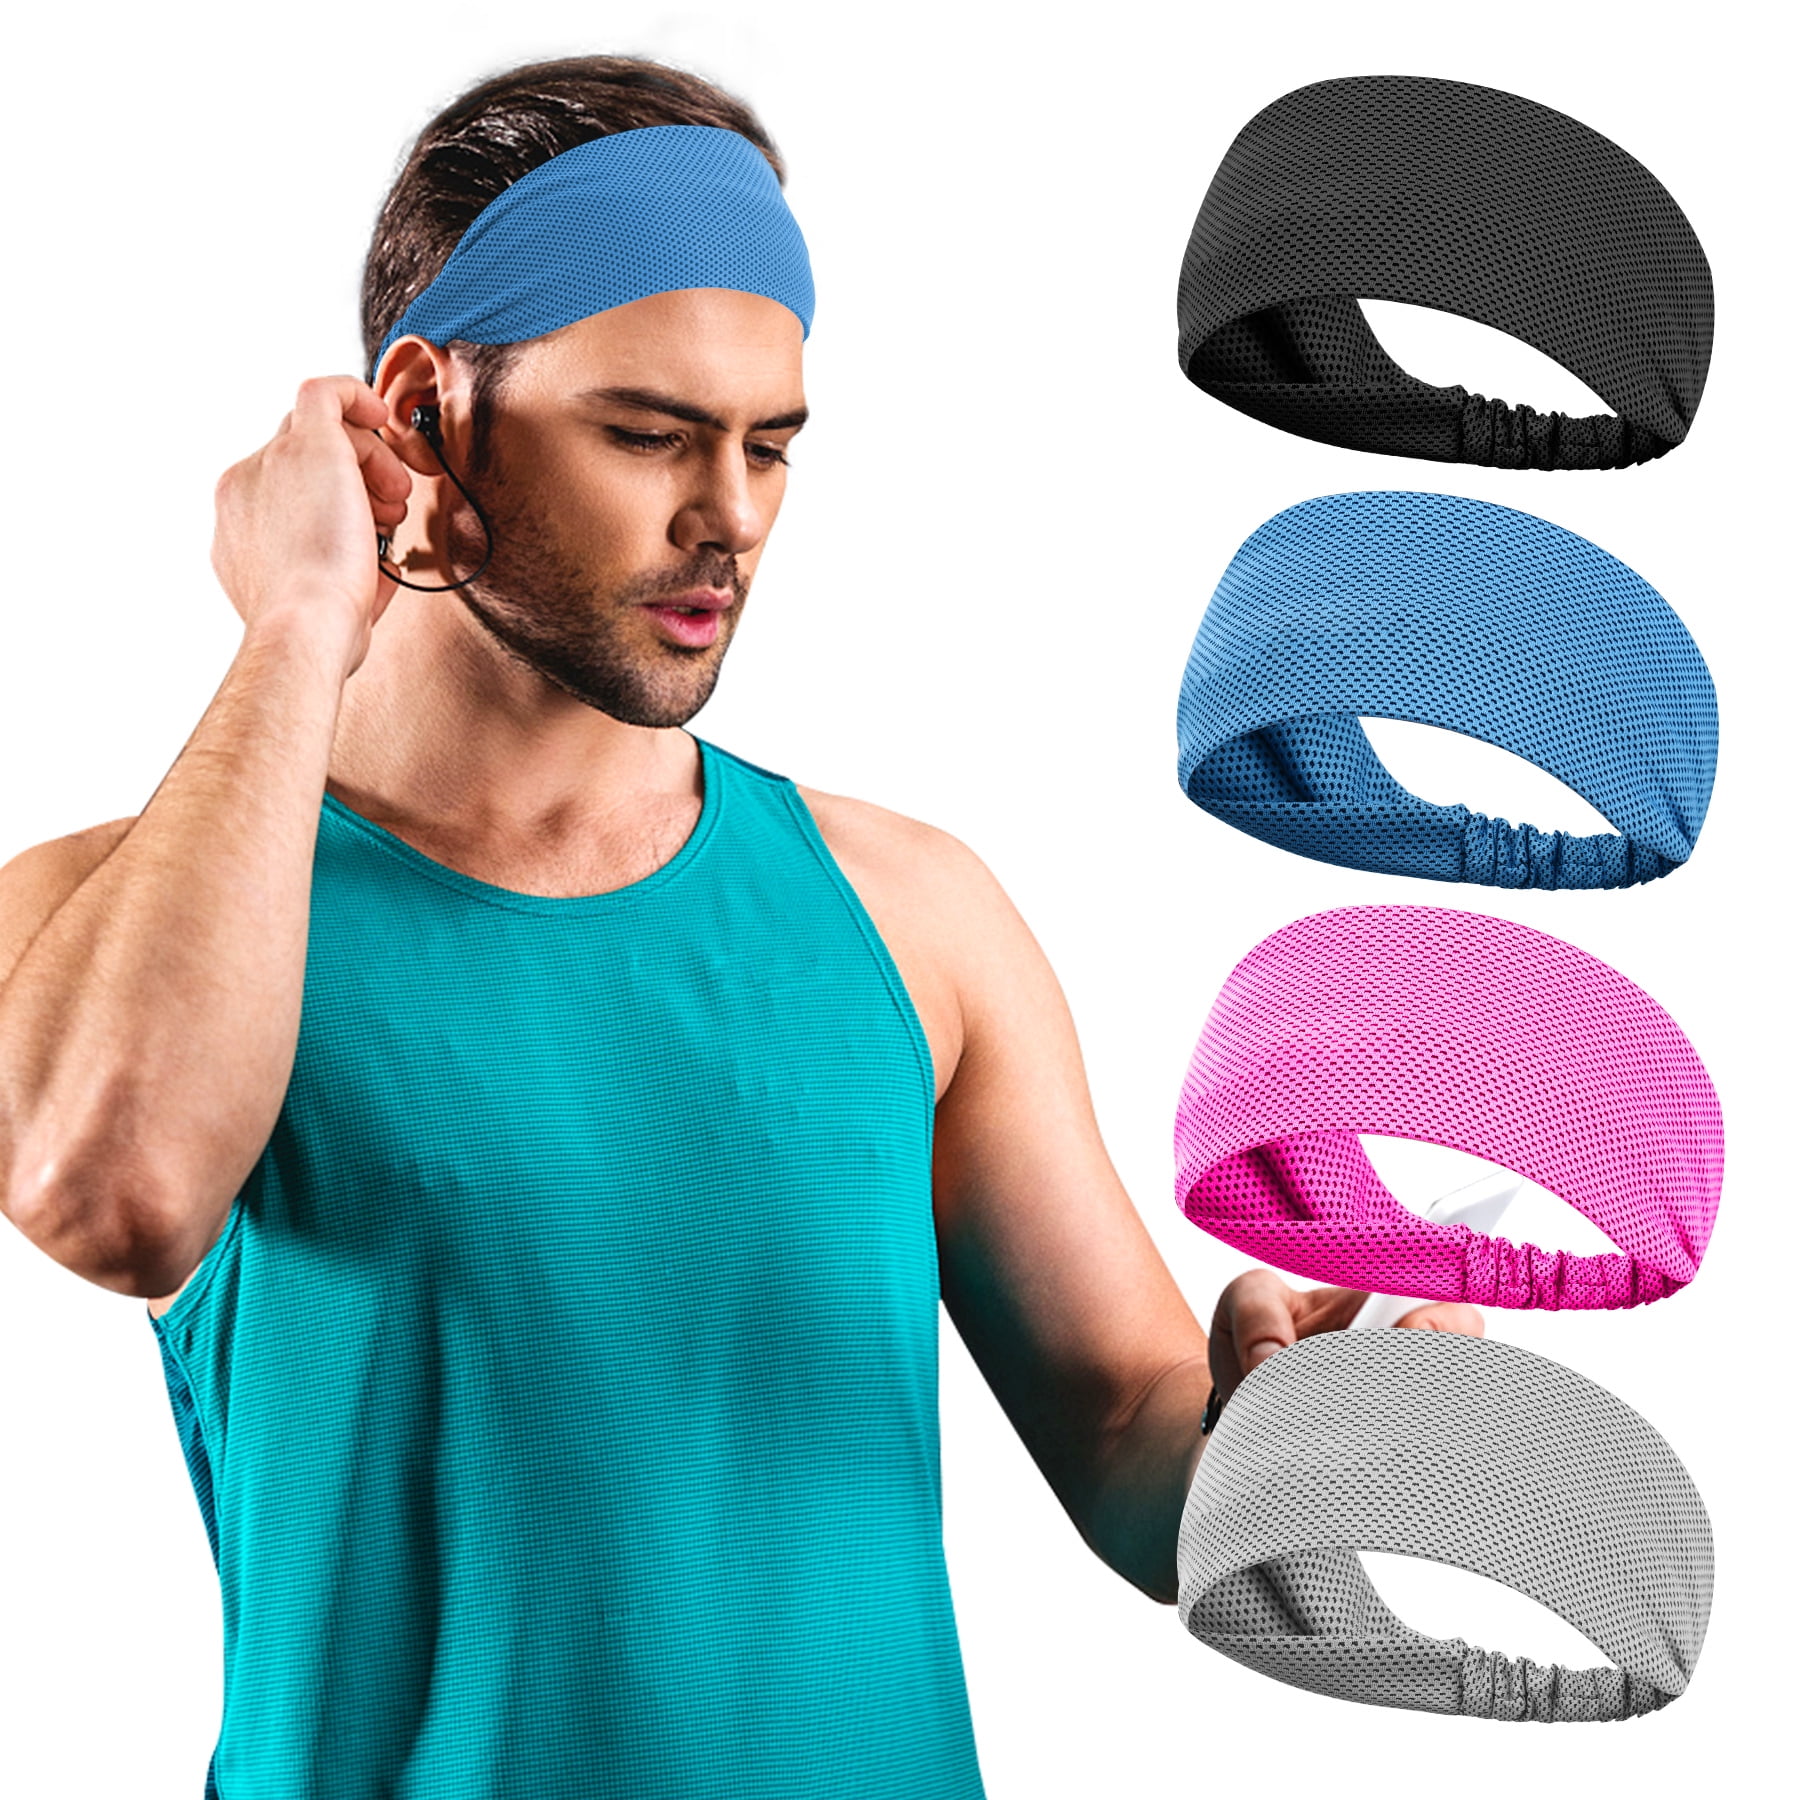  Sweat Band Headbands for Women, Sport Athletic Headband for  Yoga Running Sports Travel, Non Slip Workout Headbands,Sweatband for Women  Men : Sports & Outdoors